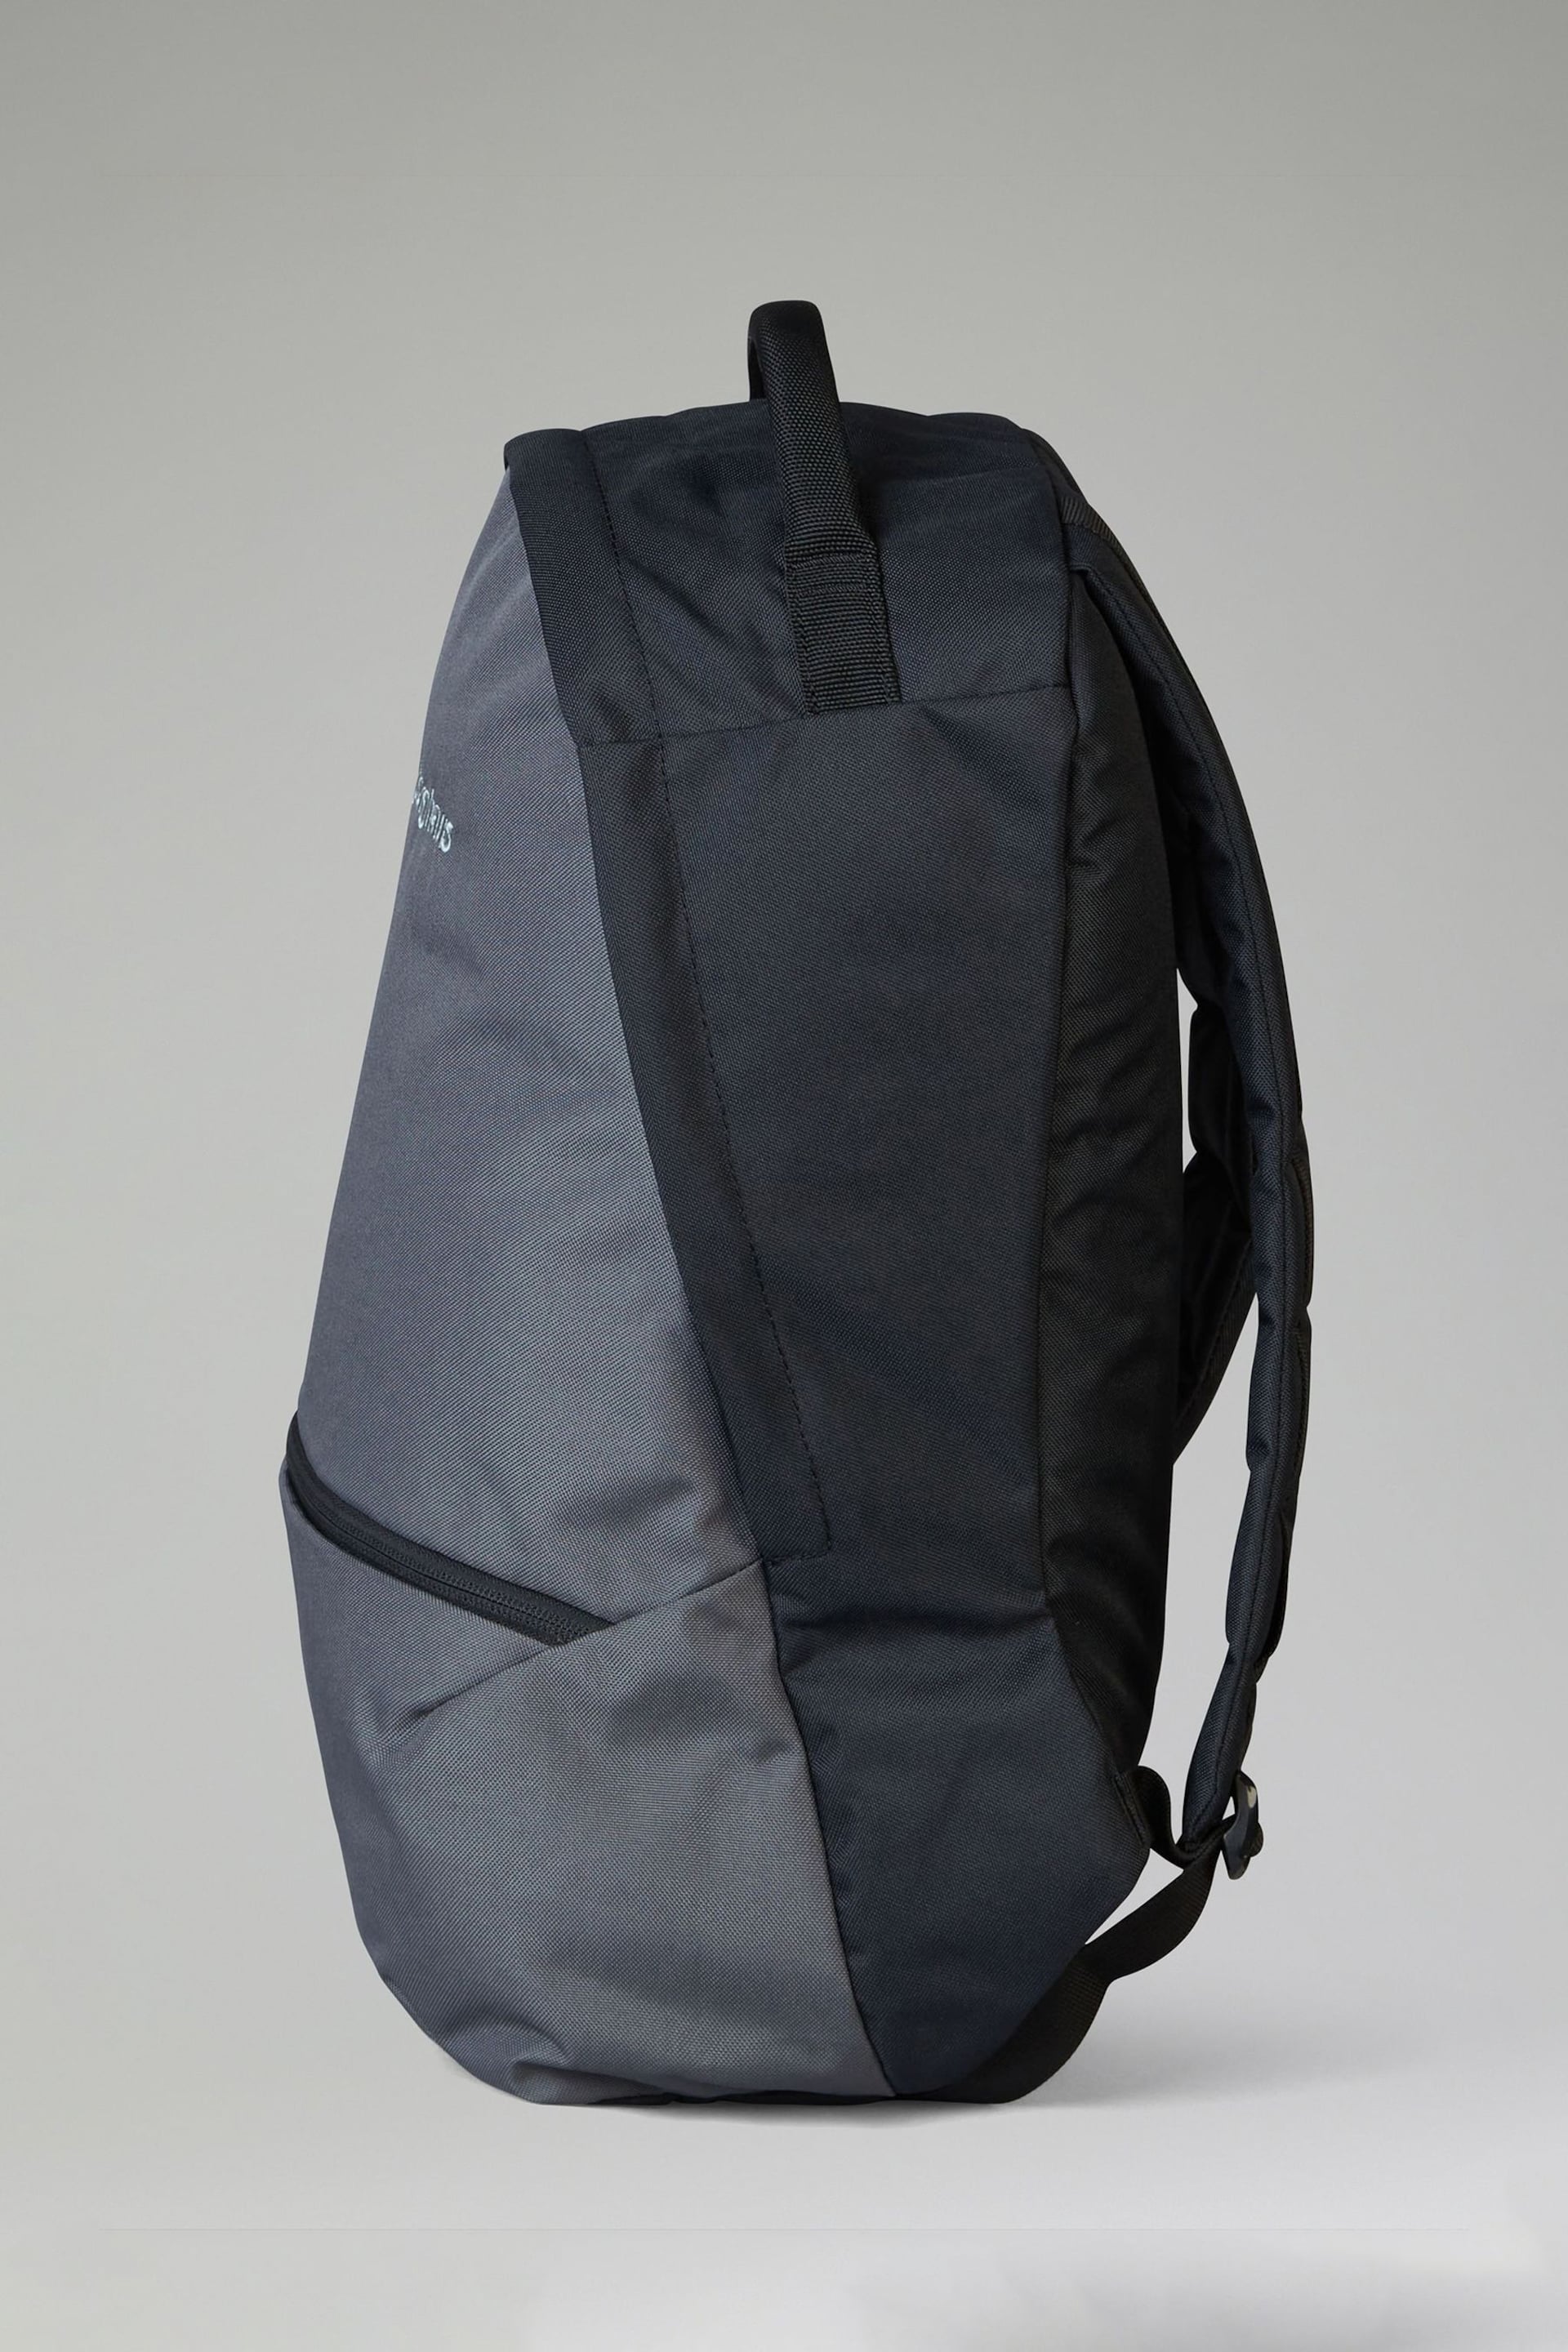 Berghaus Logo Recognition Black Backpack - Image 4 of 5